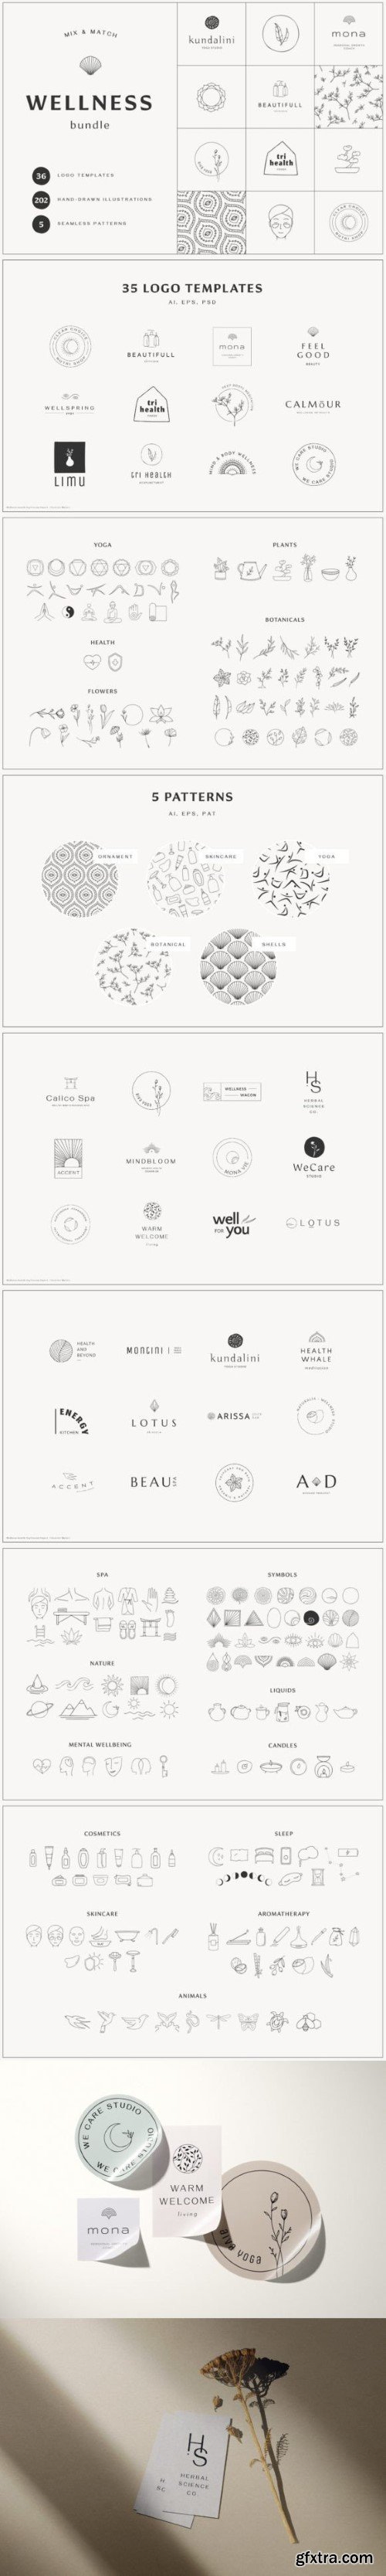 Creativemarket - WELLNESS Logos & Illustrations